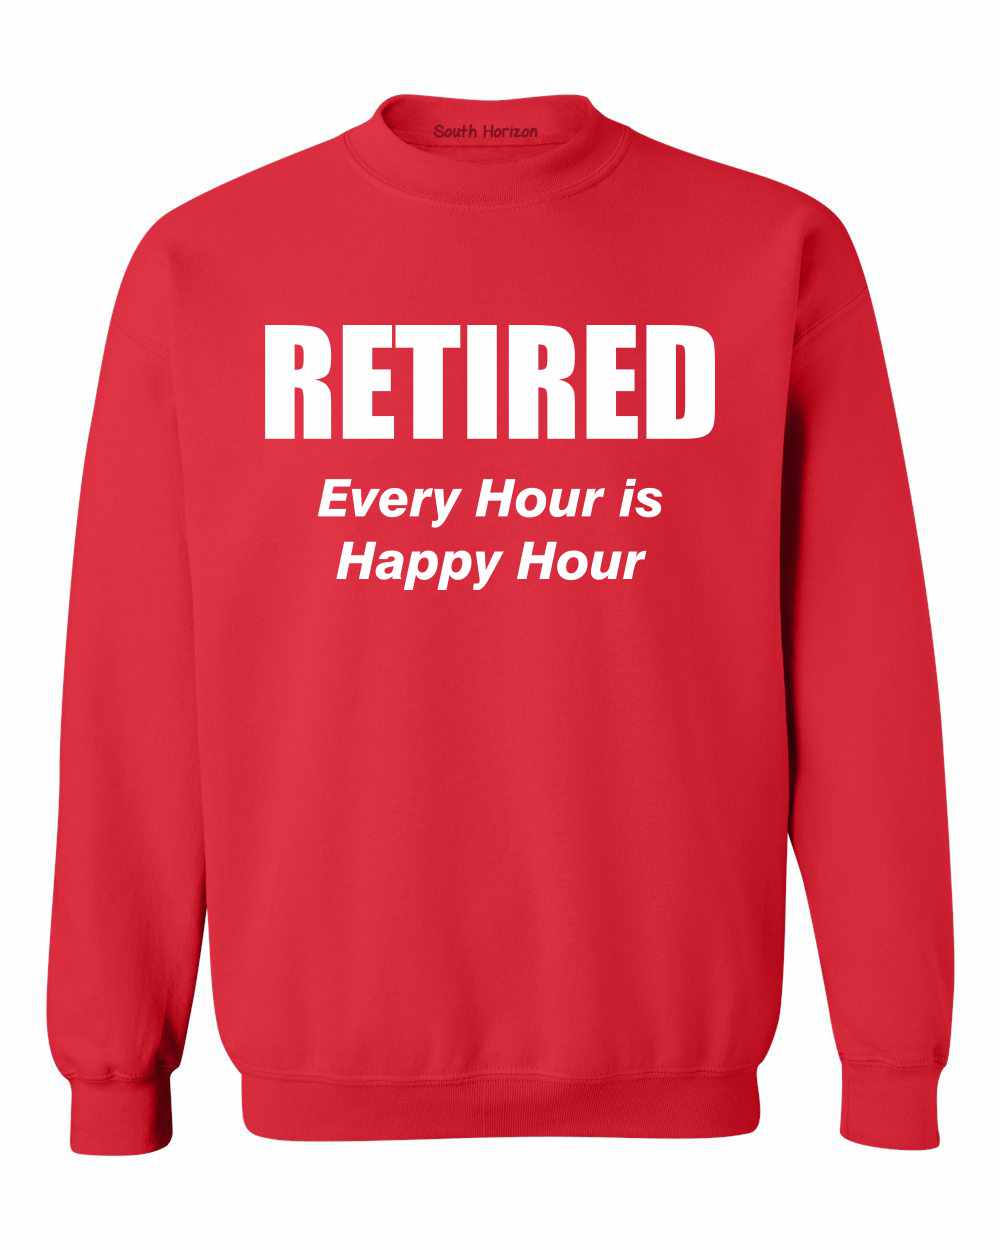 RETIRED, Every Hour Is Happy Hour on SweatShirt (#919-11)